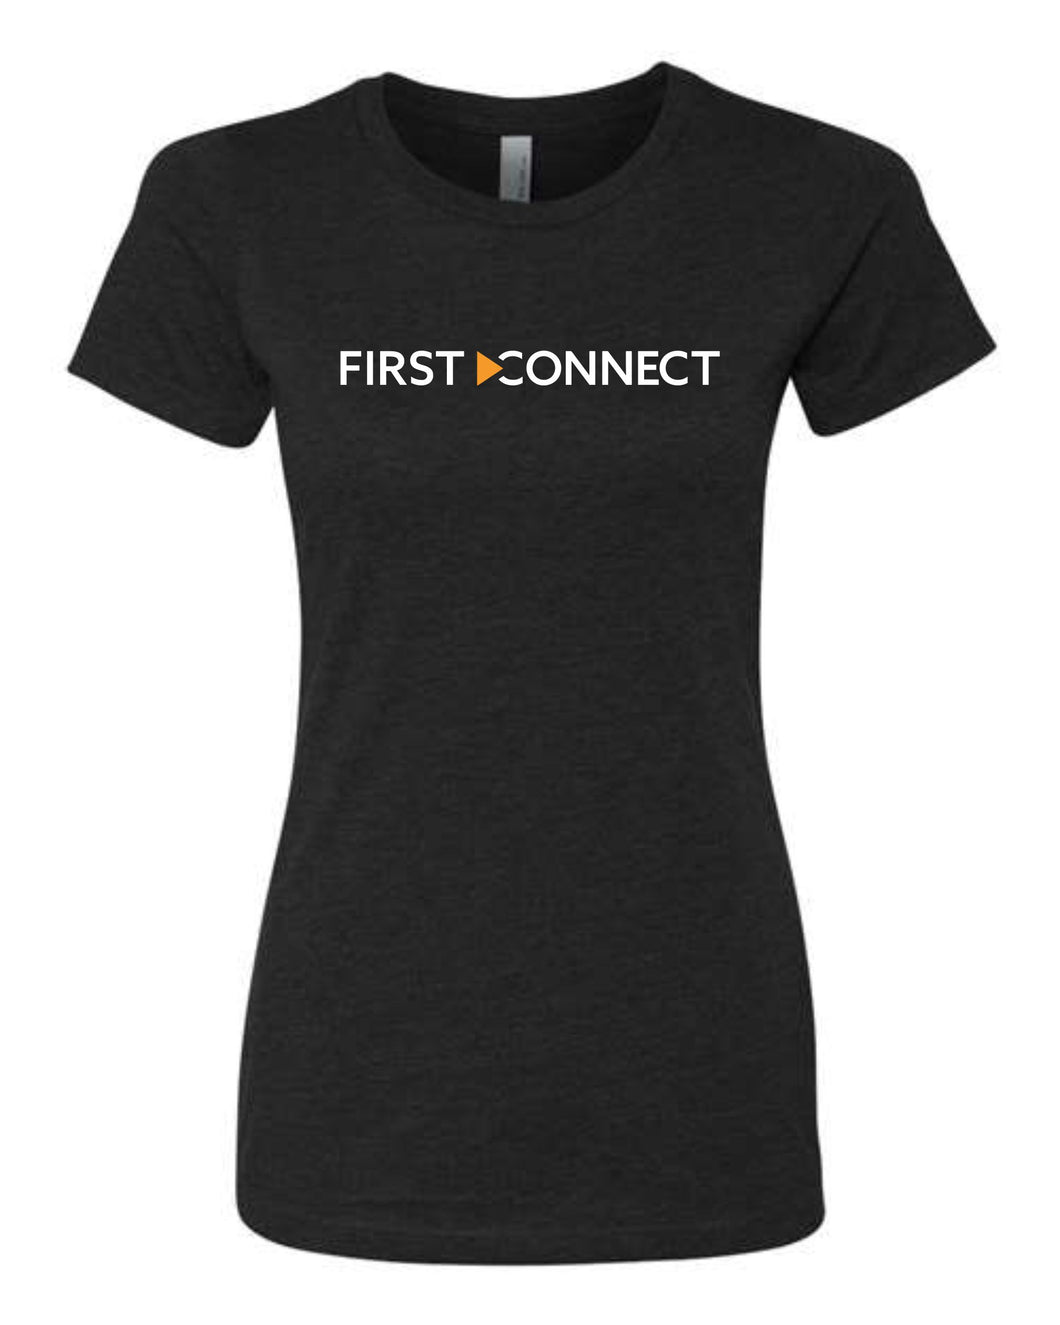 First Connect Women's Black T-Shirt